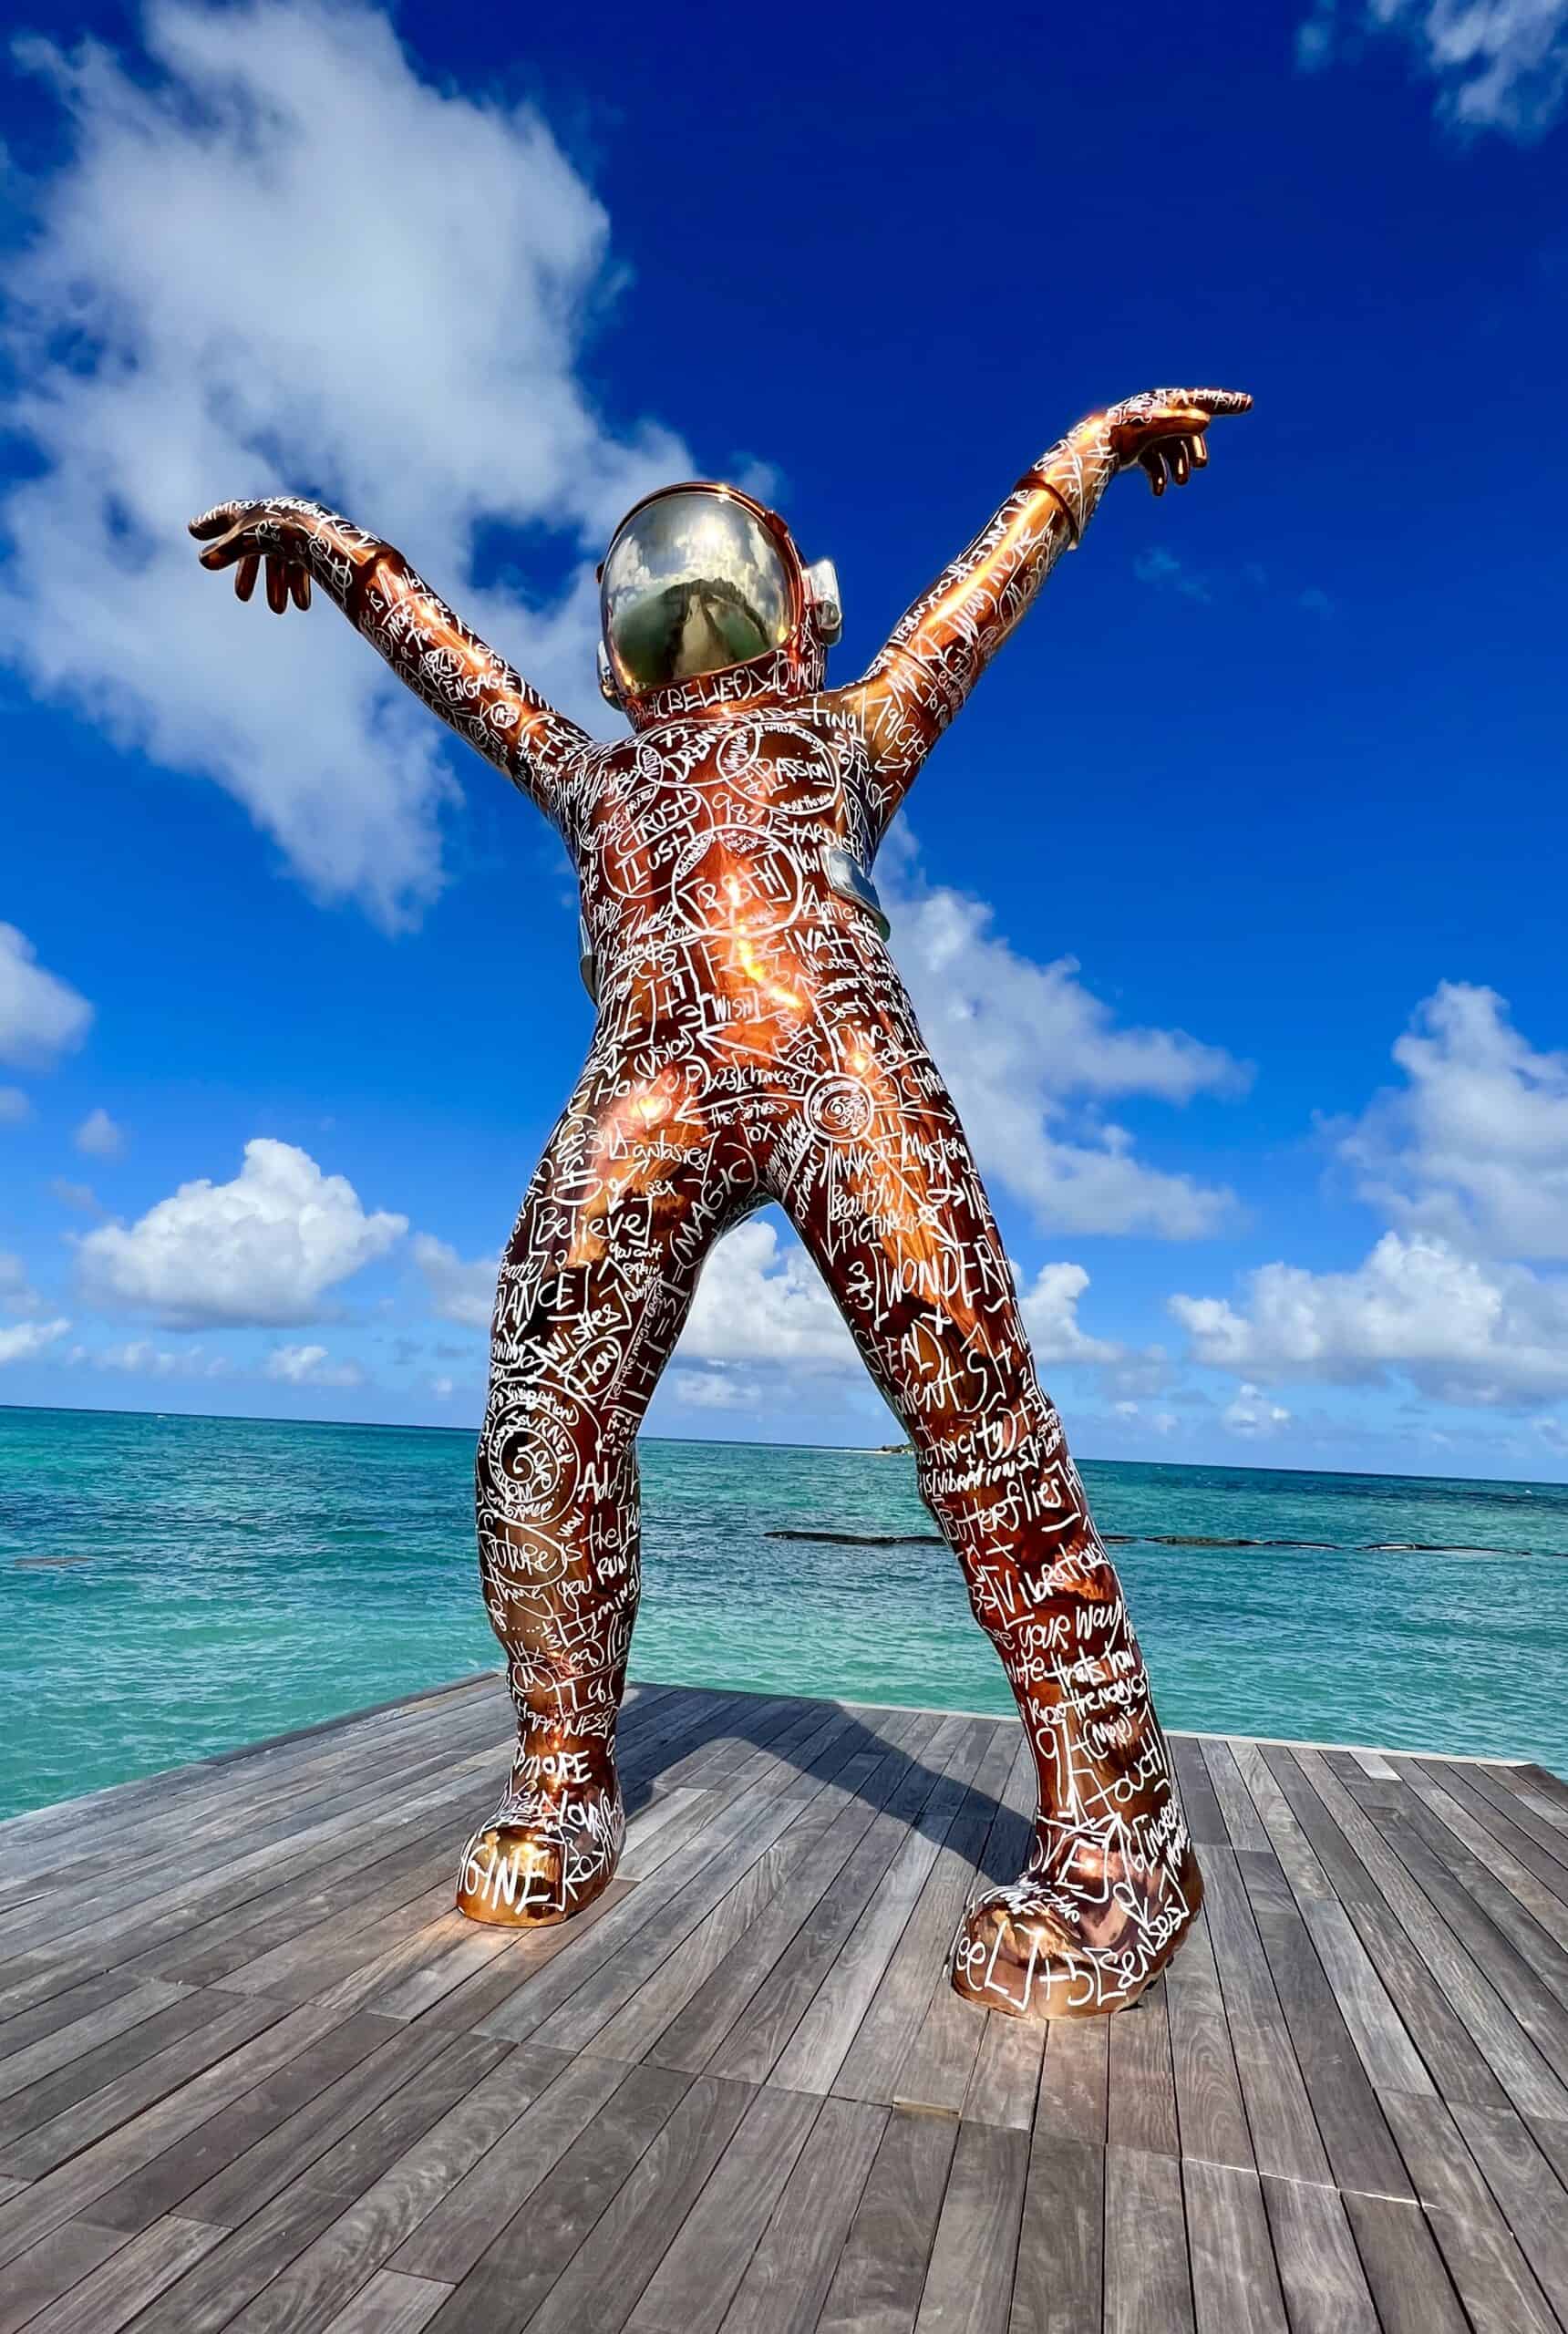 Boonji Spaceman sculpture by artist Brendan Murphy at Hodges Bay Resort in Antigua. 